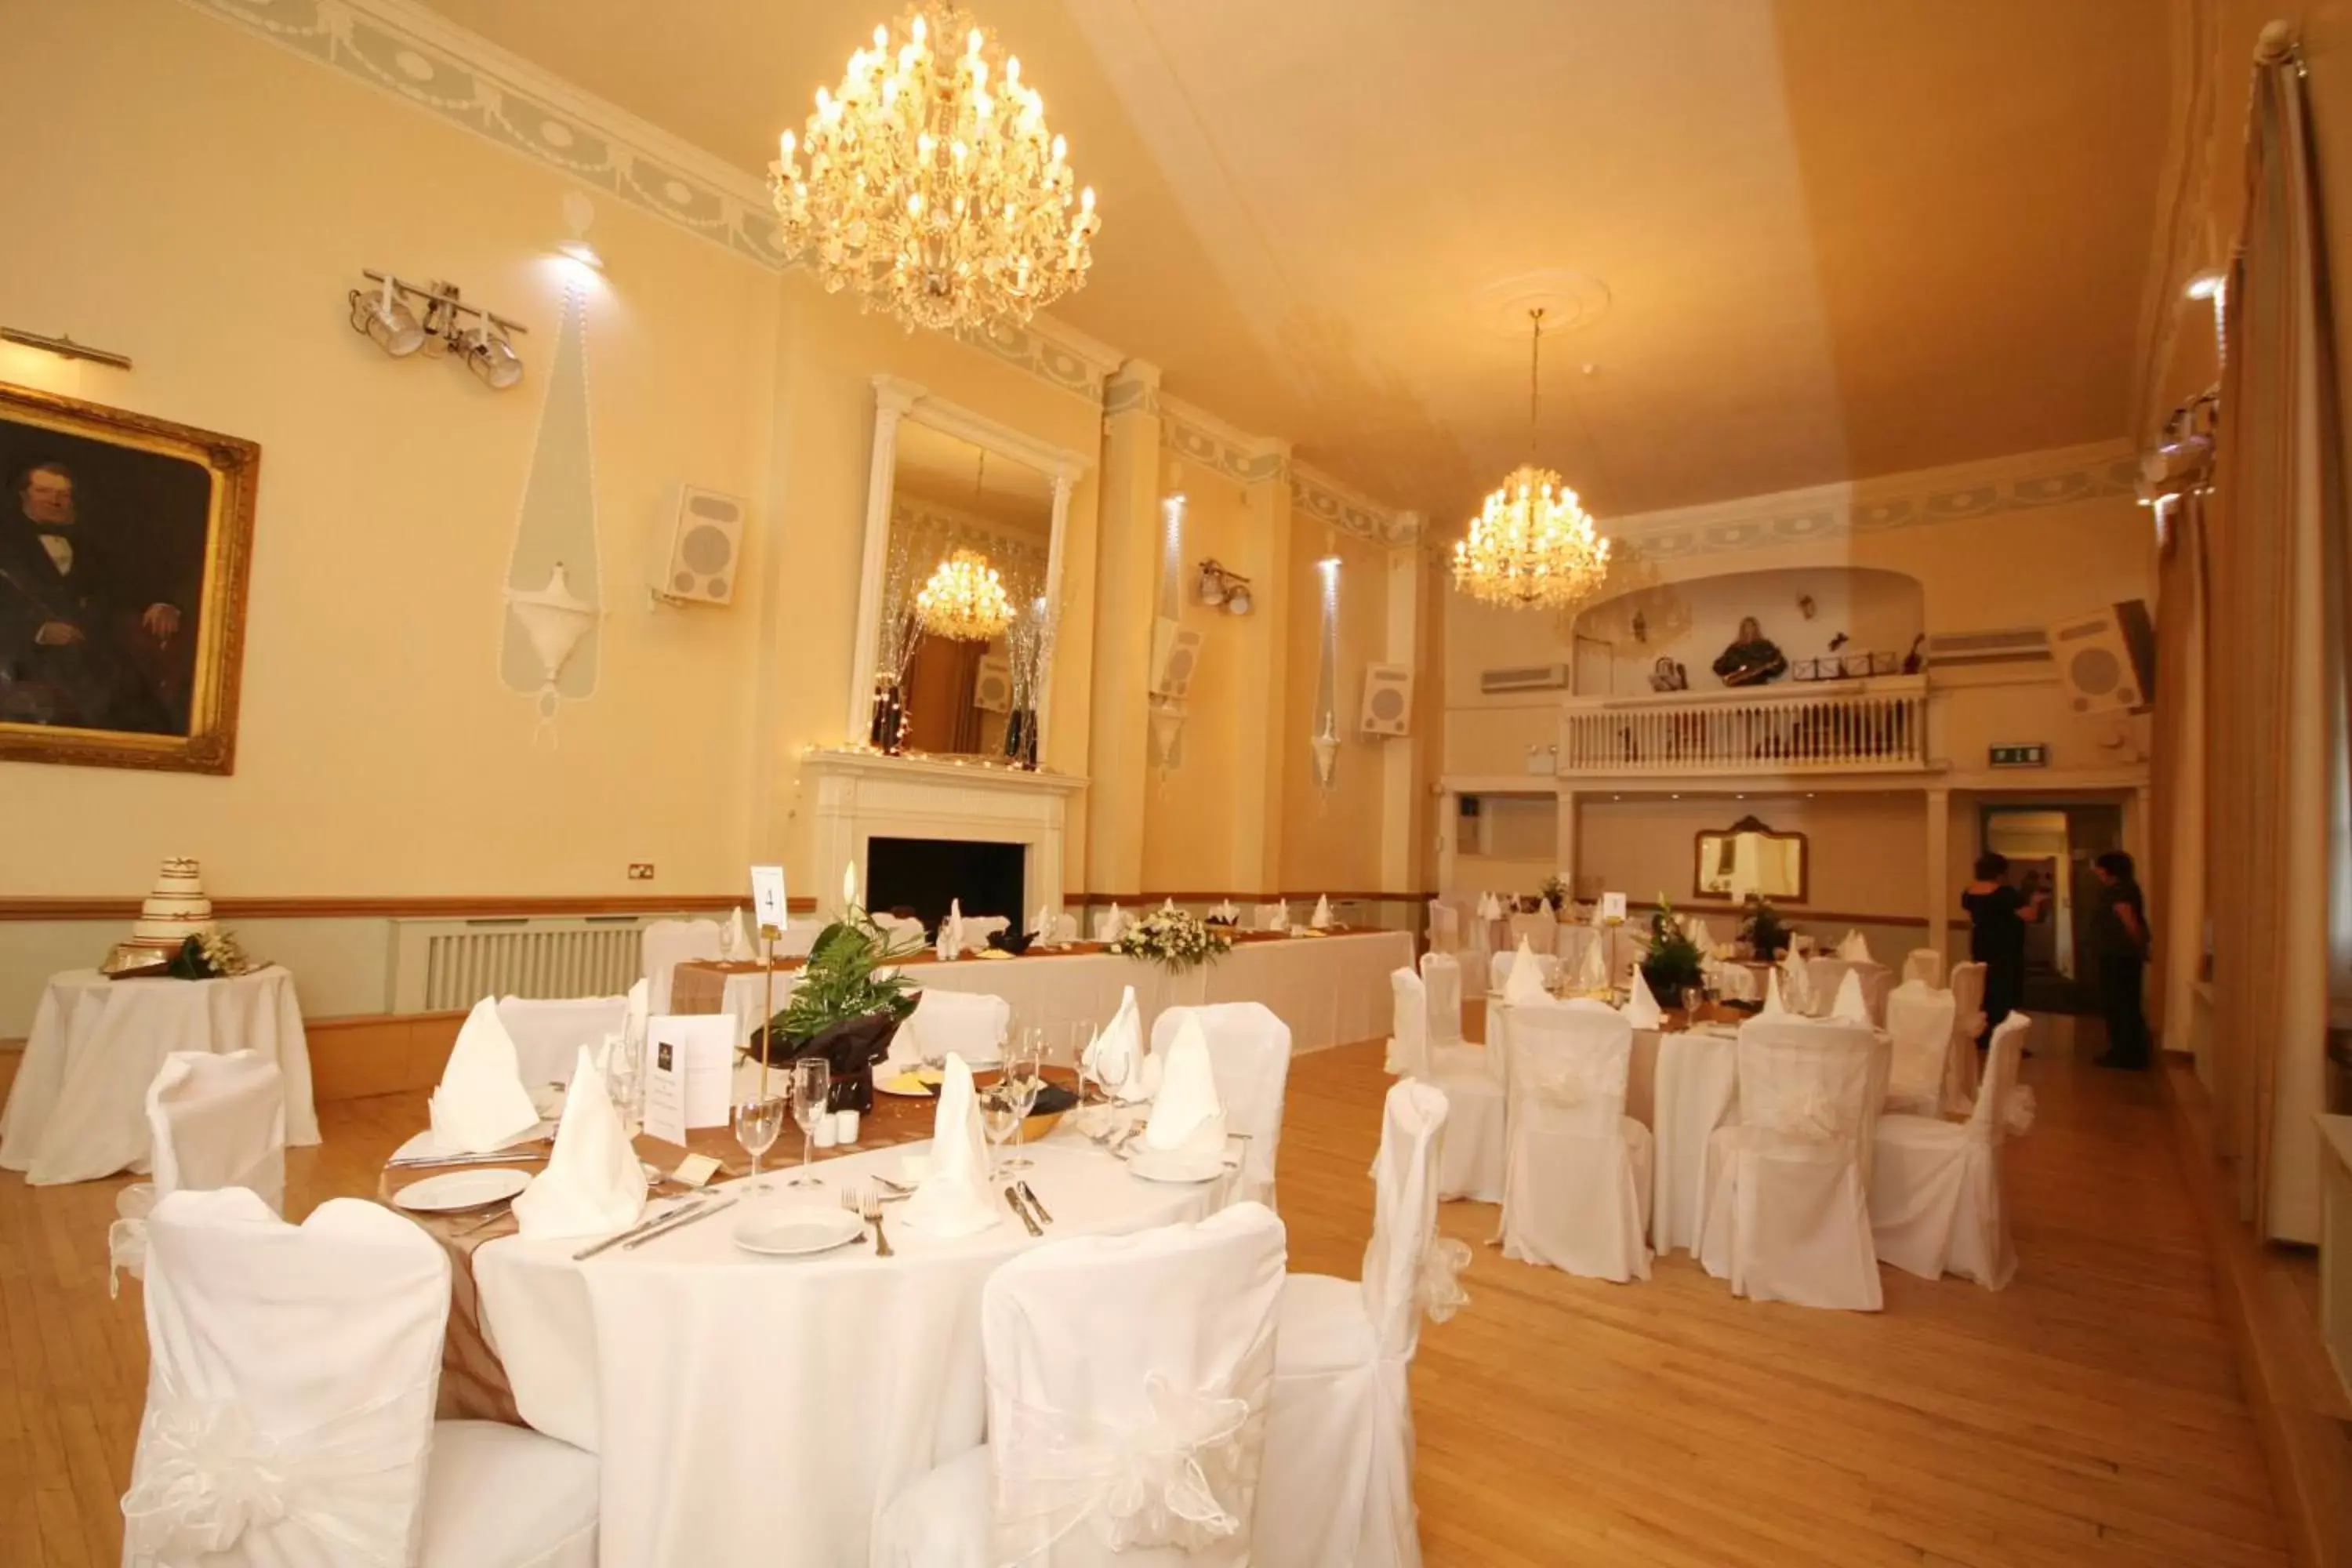 Banquet/Function facilities, Banquet Facilities in Crown Hotel